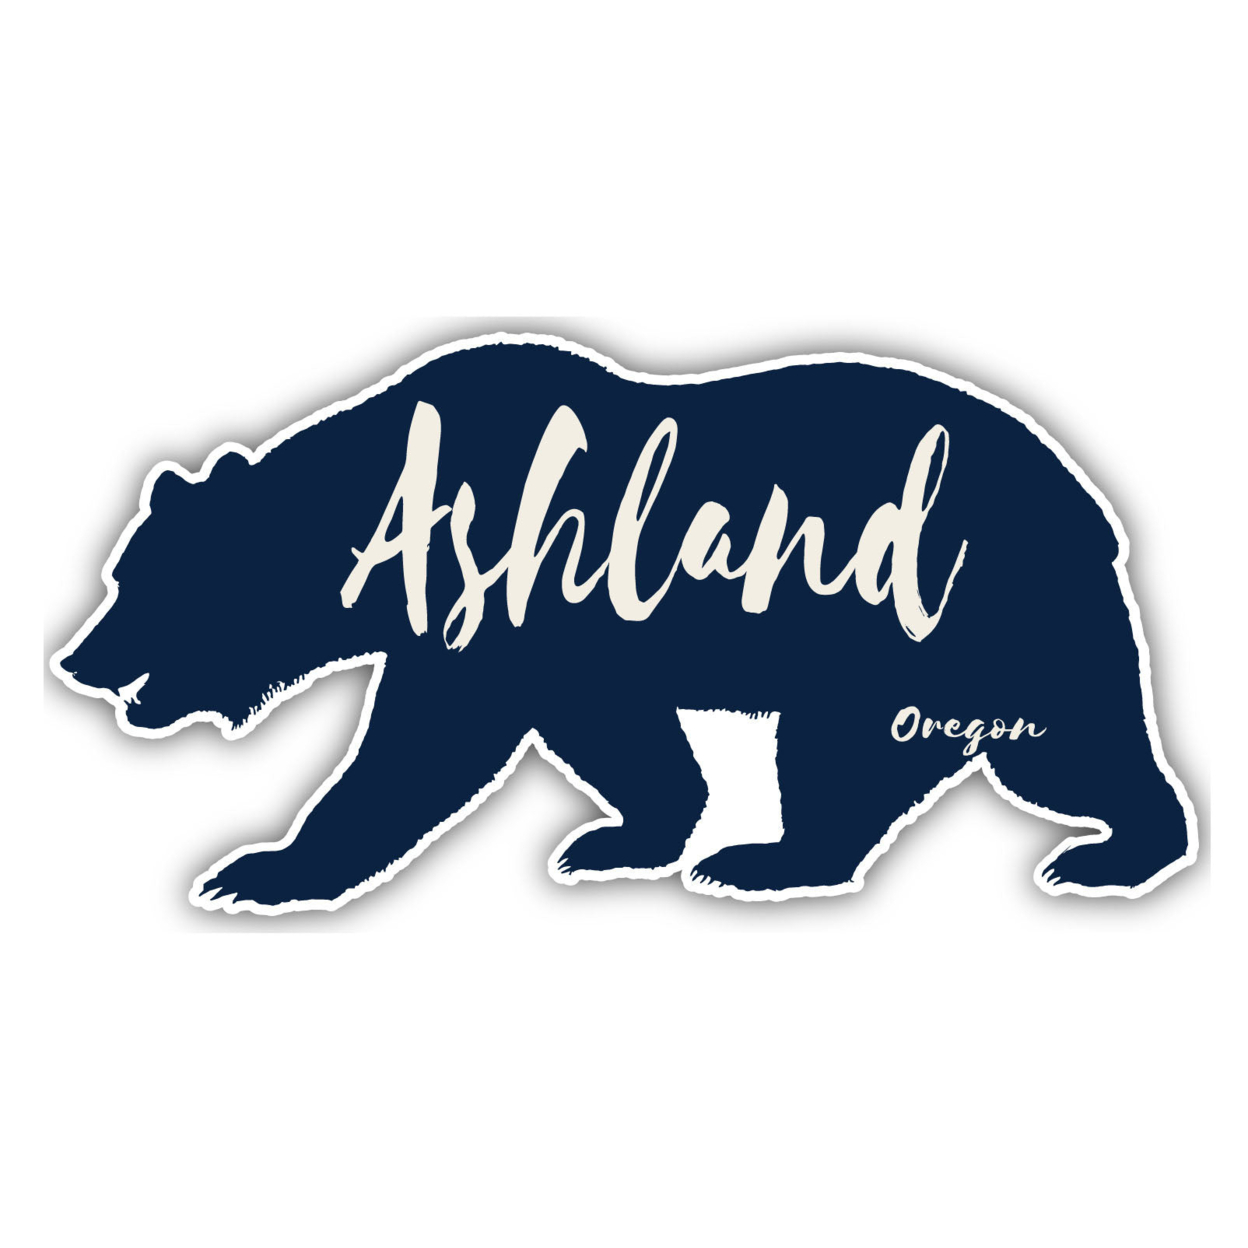 Ashland Oregon Souvenir Decorative Stickers (Choose Theme And Size) - 4-Pack, 2-Inch, Tent